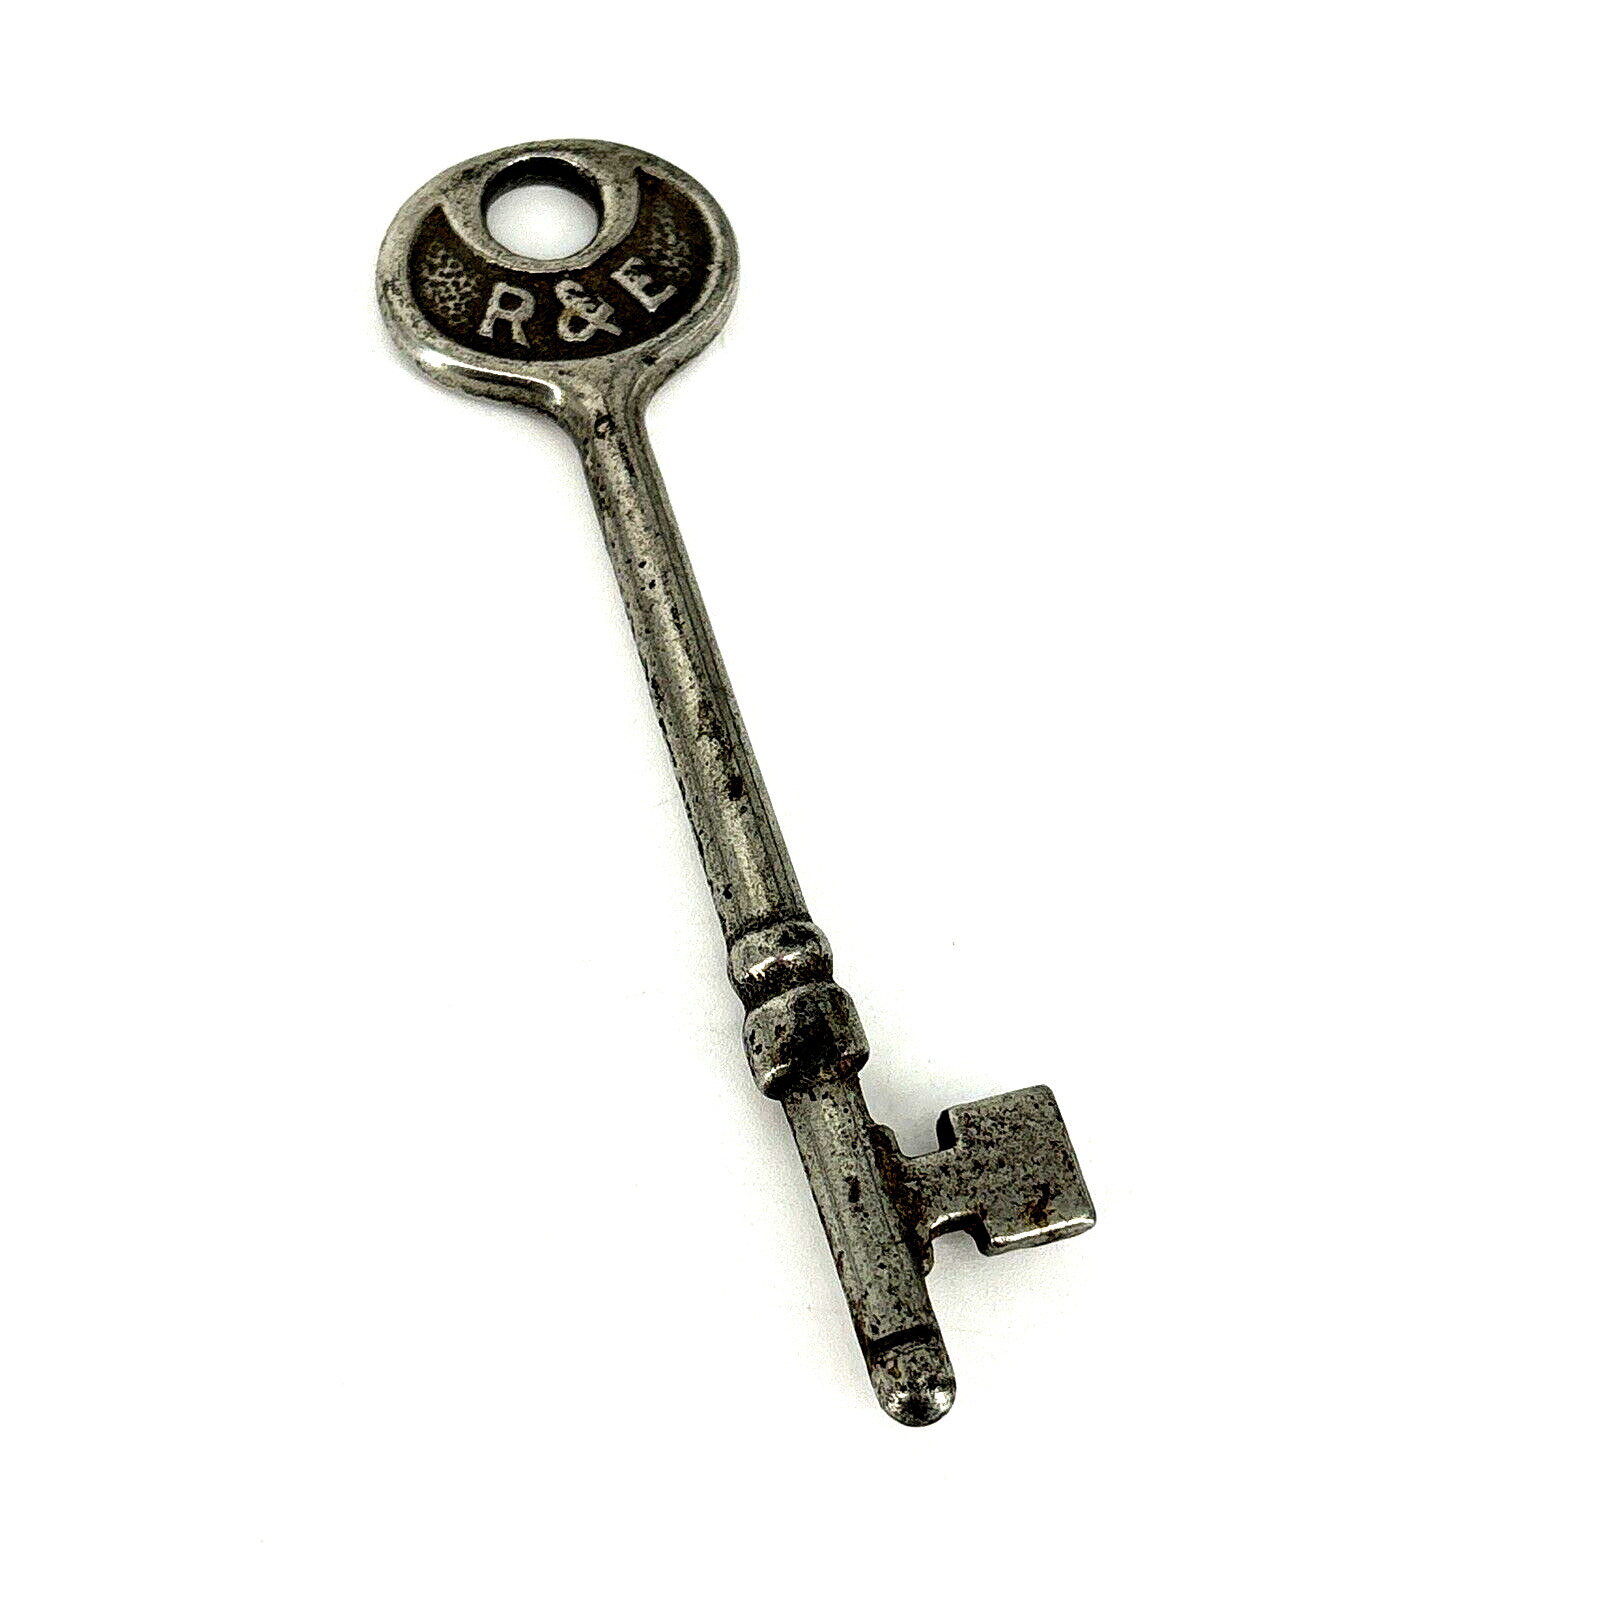 R & E Skeleton Key #5 Antique